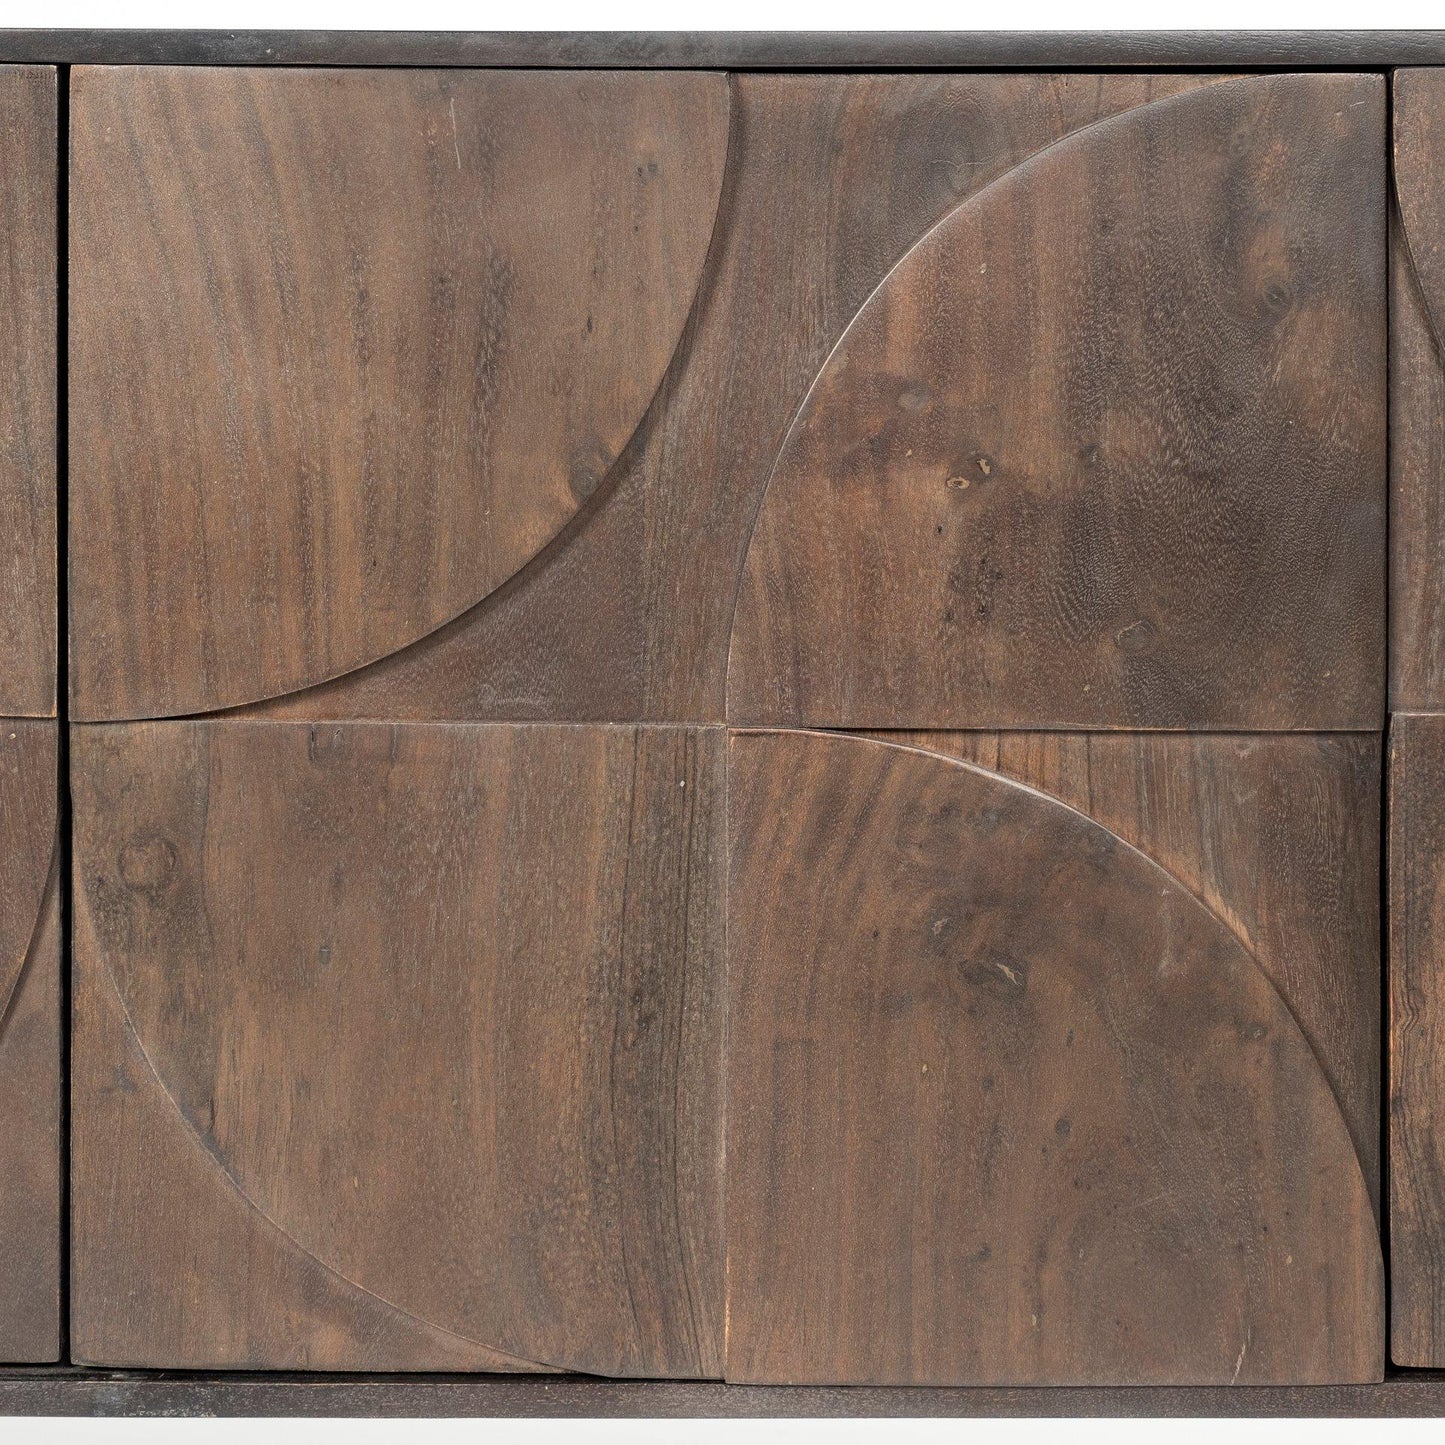 Xanti 70x18 Brown Solid Wood Frame Gold Metal Legs 4 Door Cabinet Sideboard